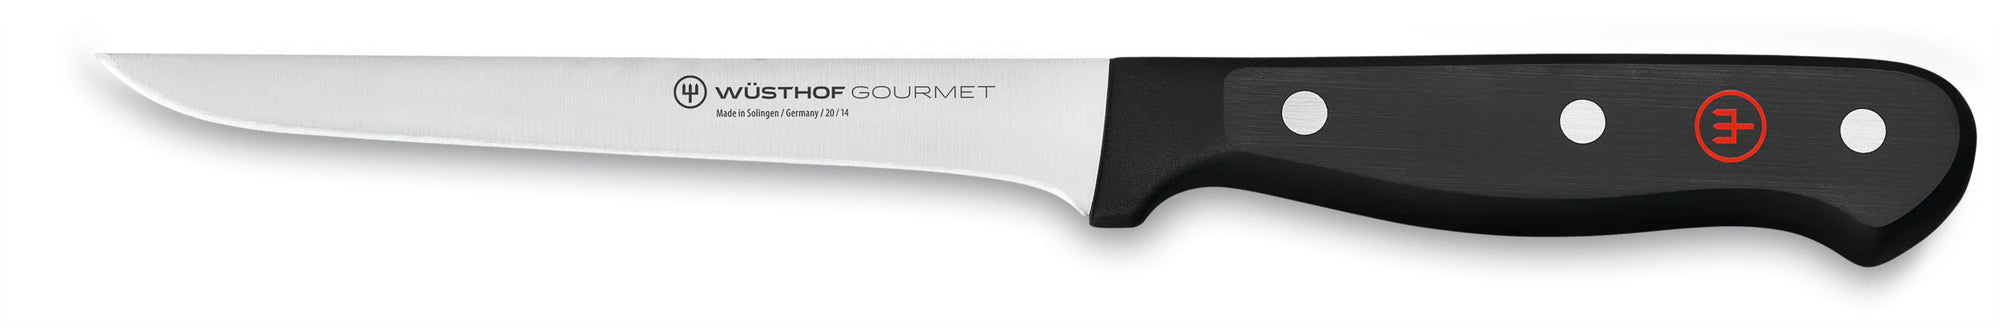 Wusthof Gourmet Boning Knife, Stiff, 5-inch (14cm) - 4606-14